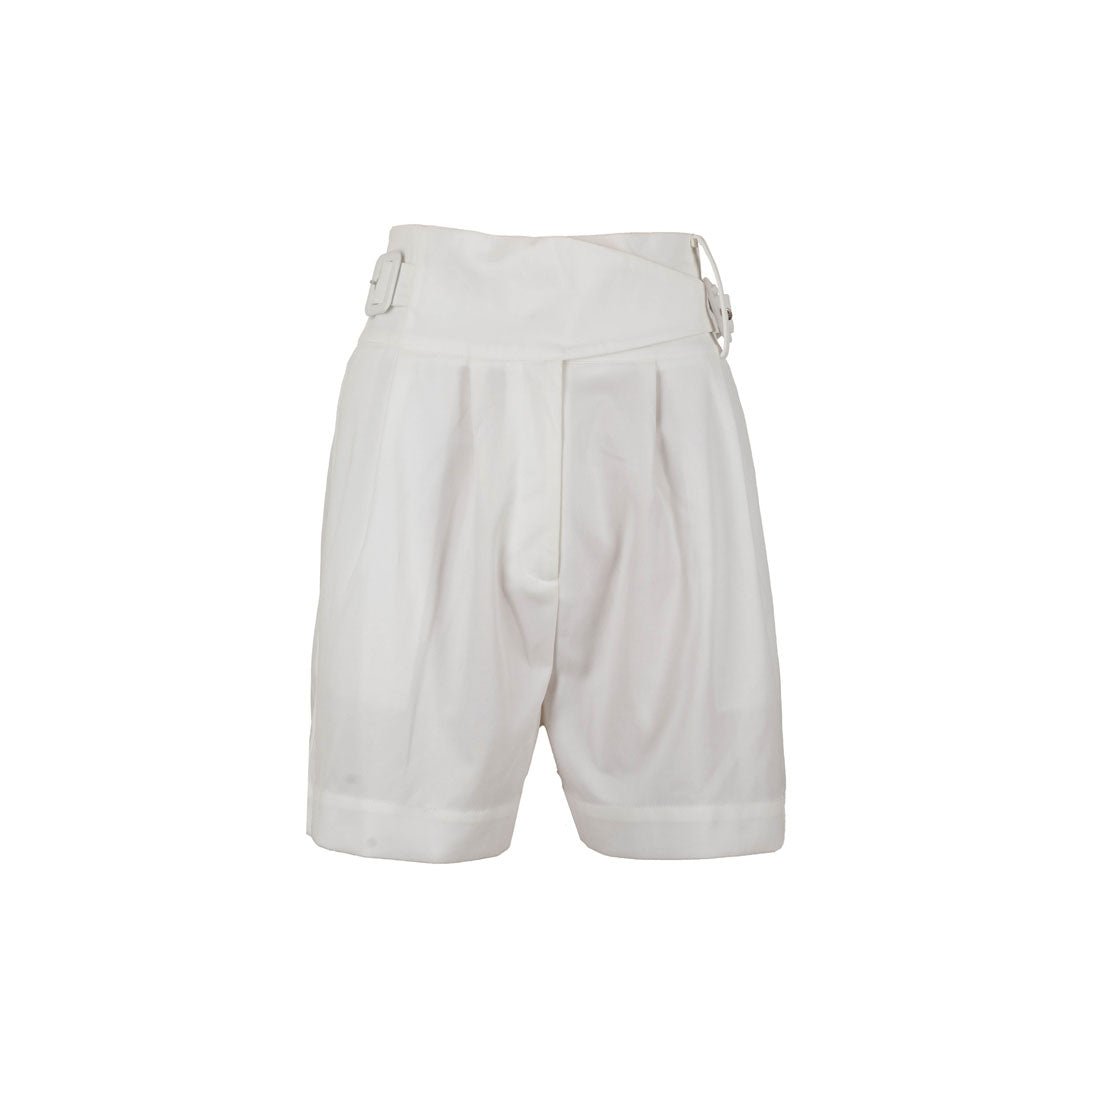 Unique21 Brand New Shorts - mymadstore.com